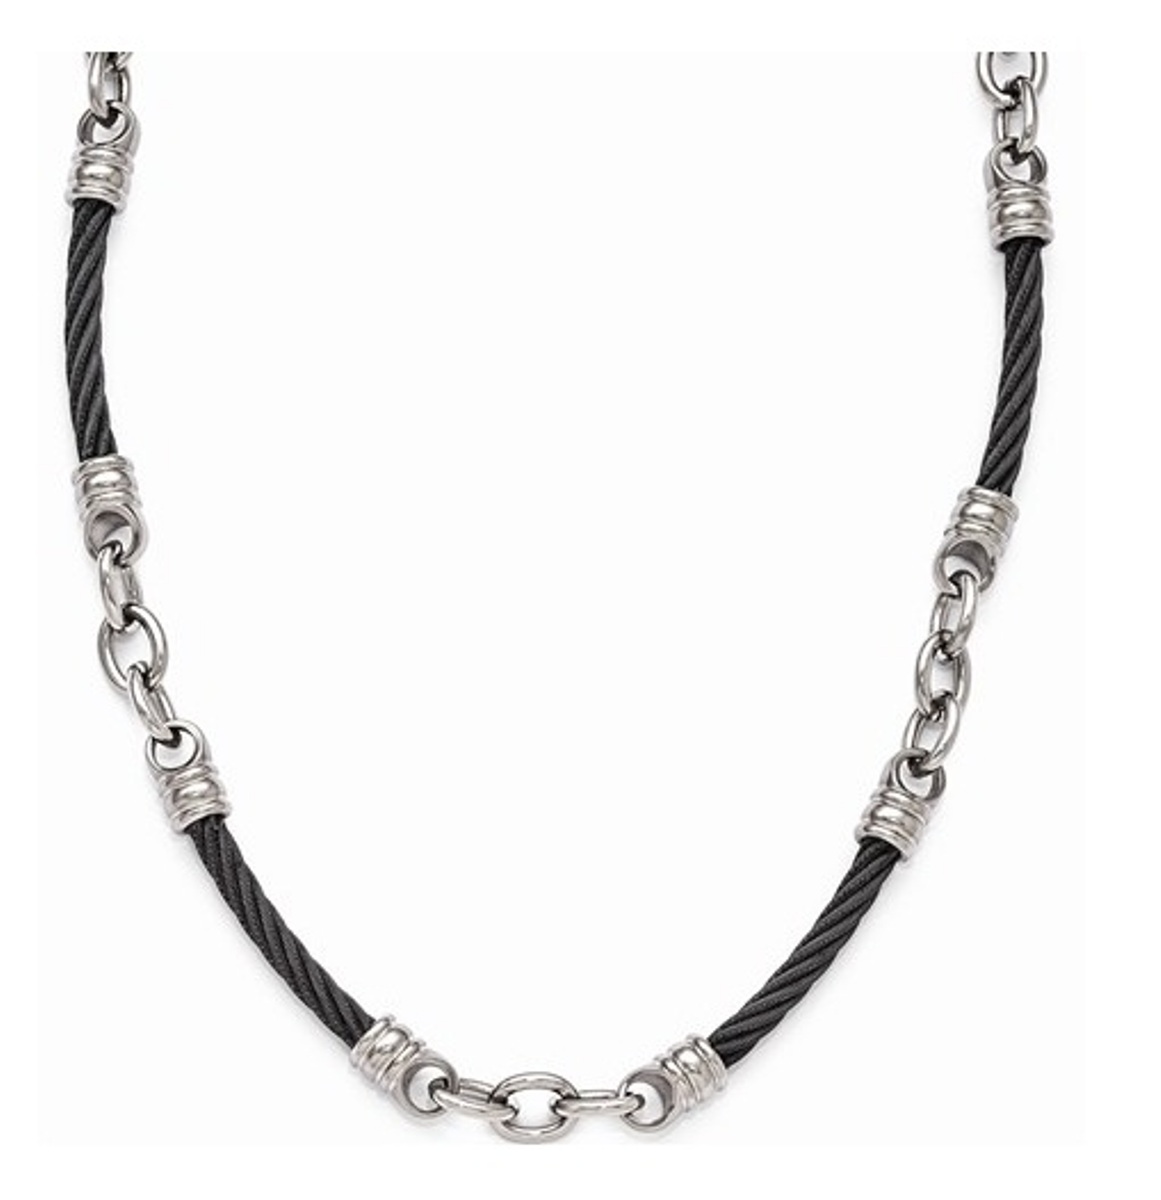 Edward Mirell Titanium and Black Titanium Cable Link Necklace, 20